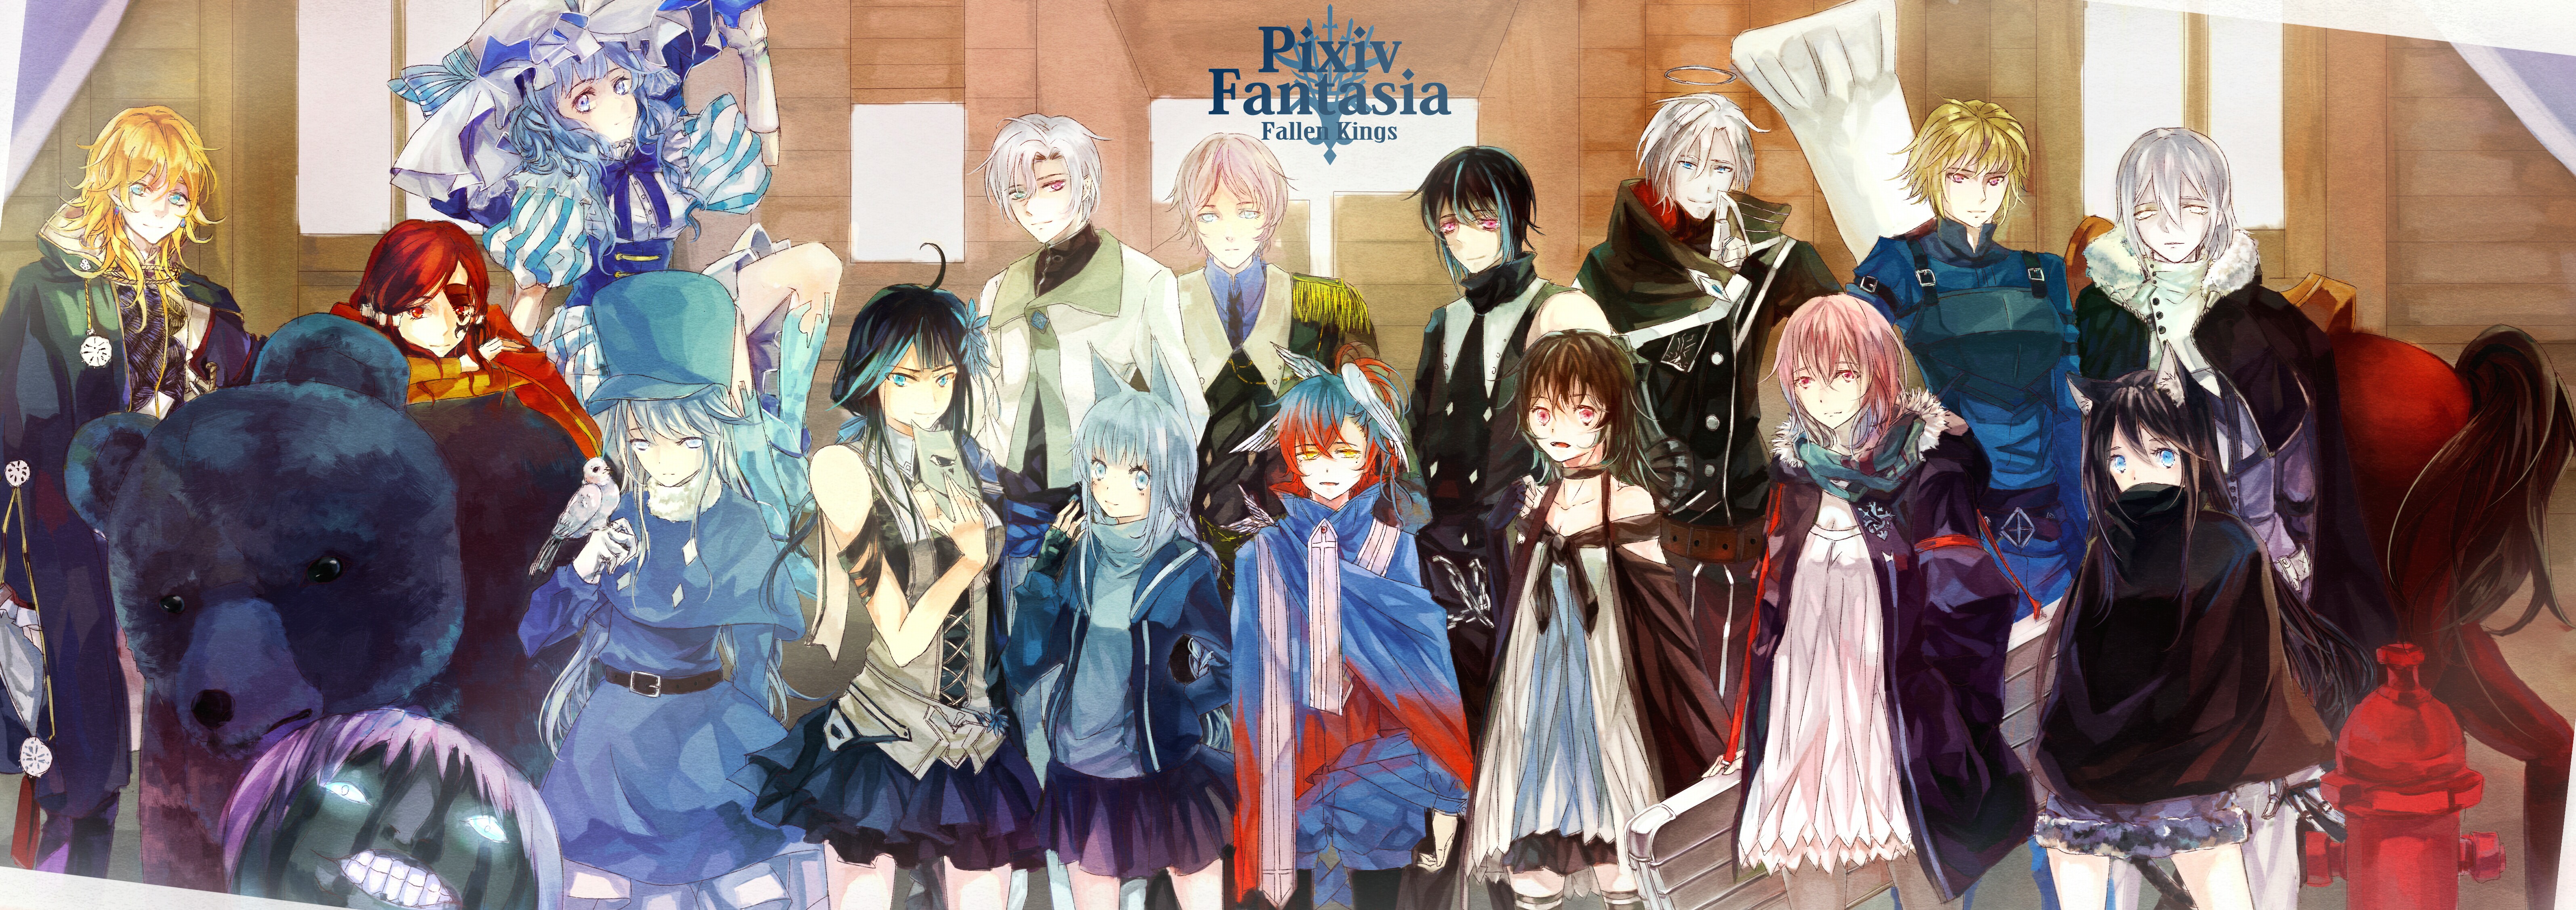 Anime 6375x2253 Pixiv Fantasia: Fallen Kings anime girls anime boys Pixiv Pixiv Fantasia anime fantasy girl fantasy men